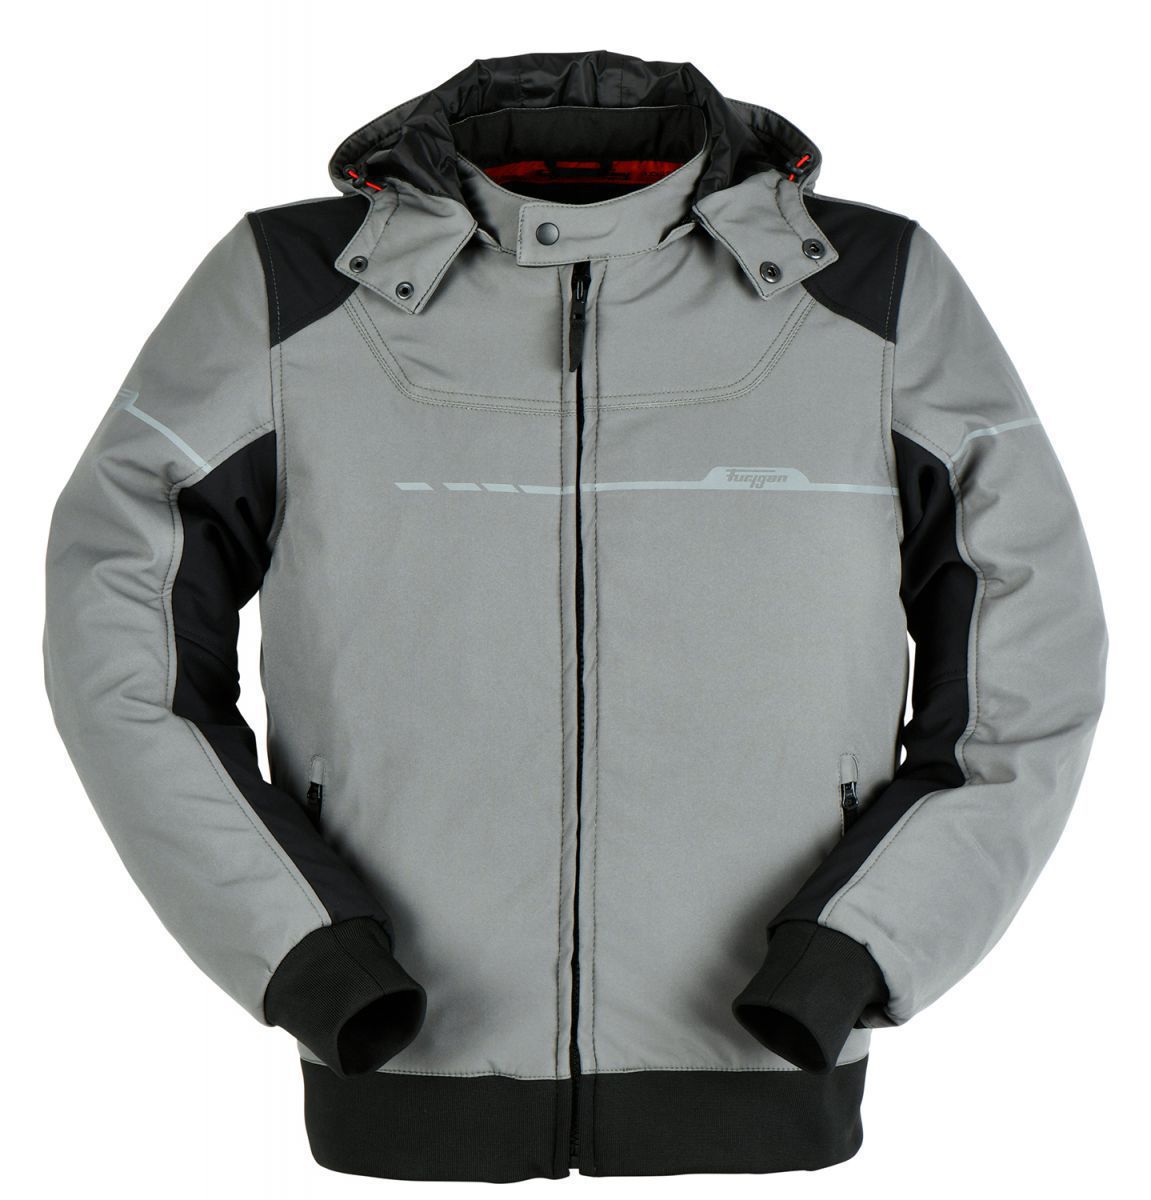 Image of Furygan Sektor Evo Jacket Black Gray Size XL ID 3435980334956